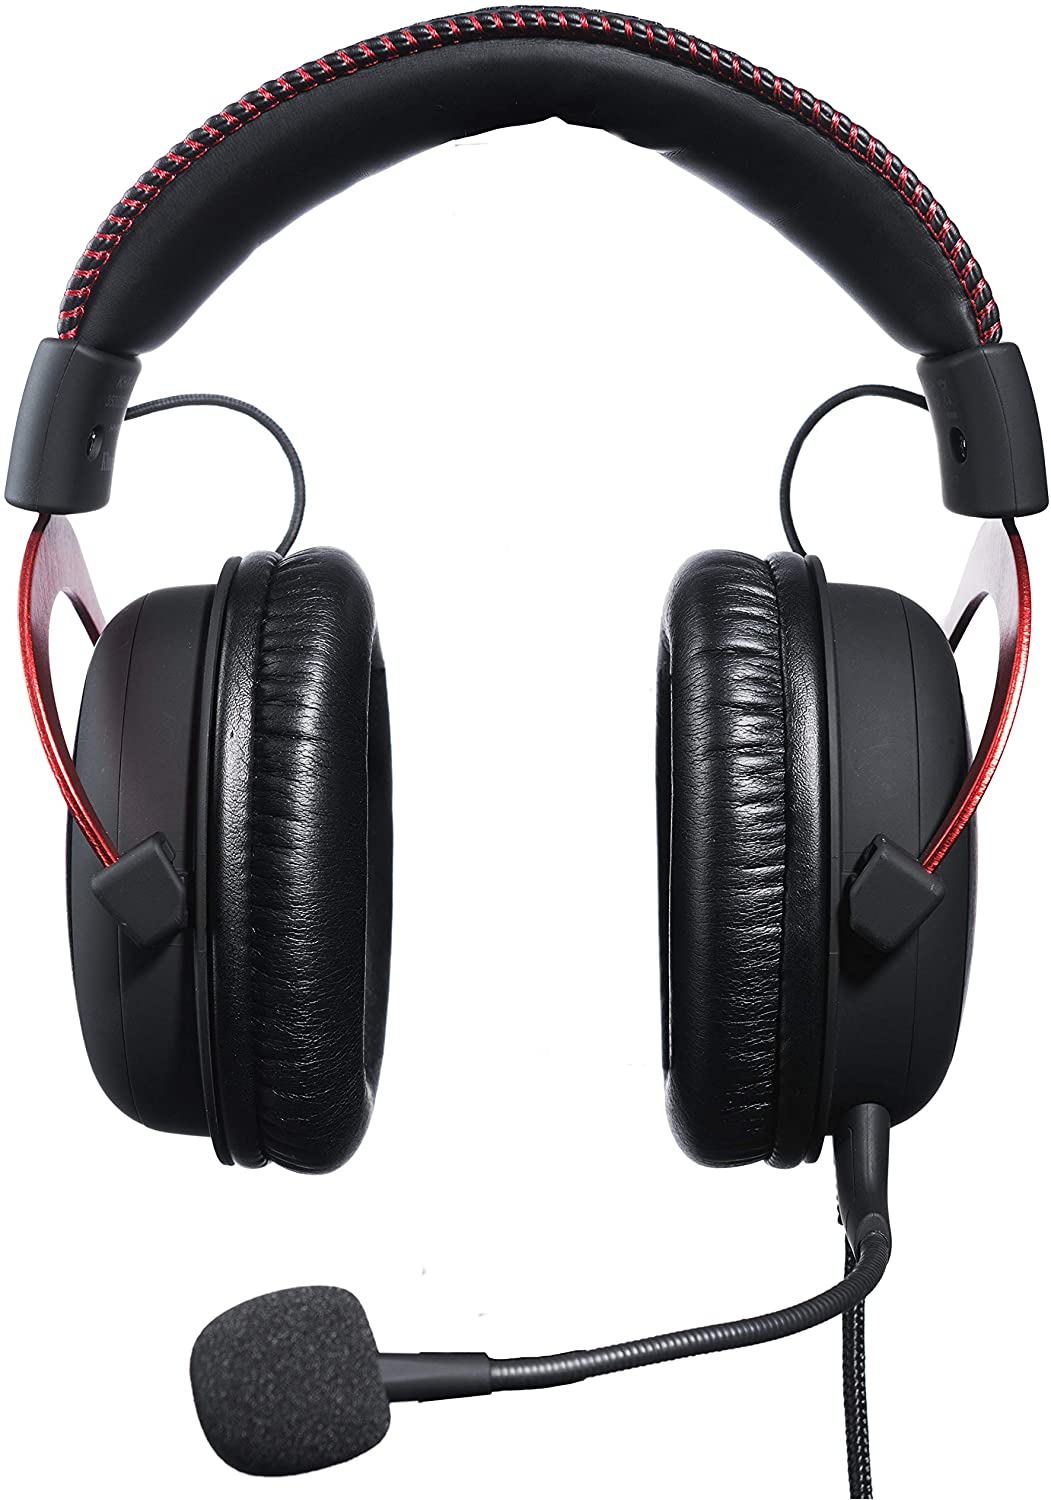 HyperX Cloud II Gaming Headset - 7.1 Surround Sound - Memory Foam Ear Pads  - Centro Digital PRS